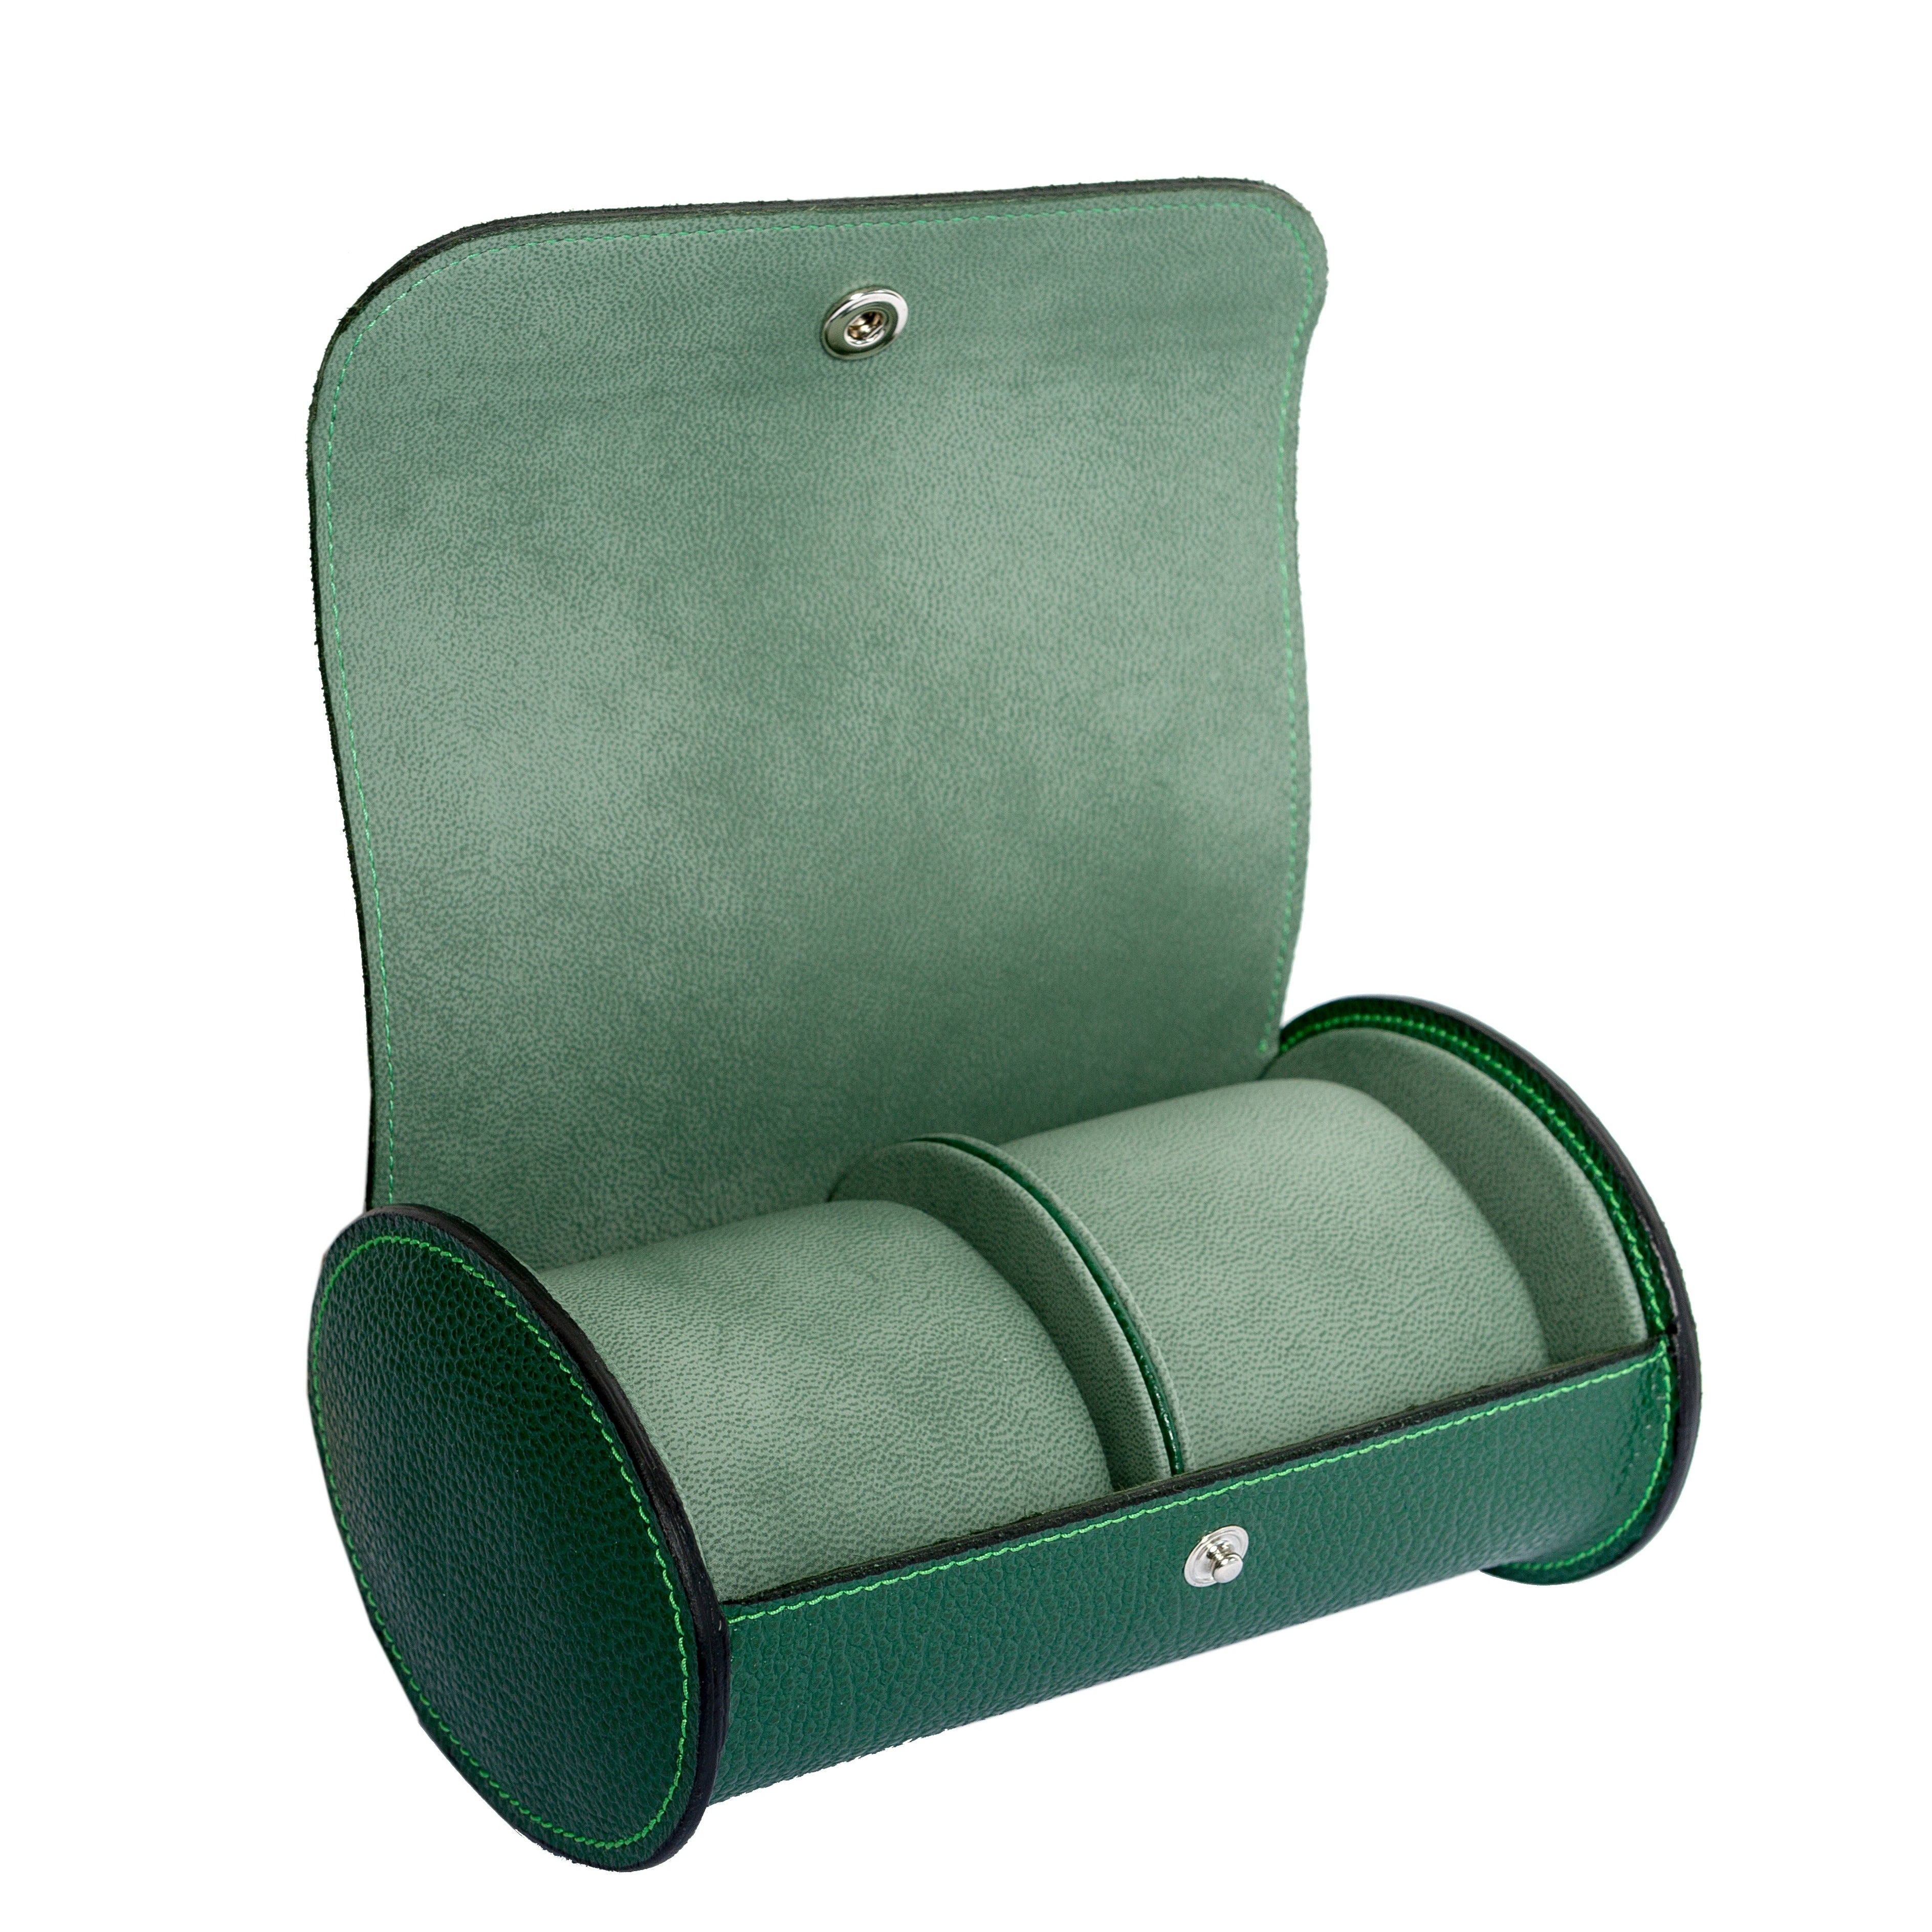 Underwood (London) - Double Round Watch Storage Case in Green Leather